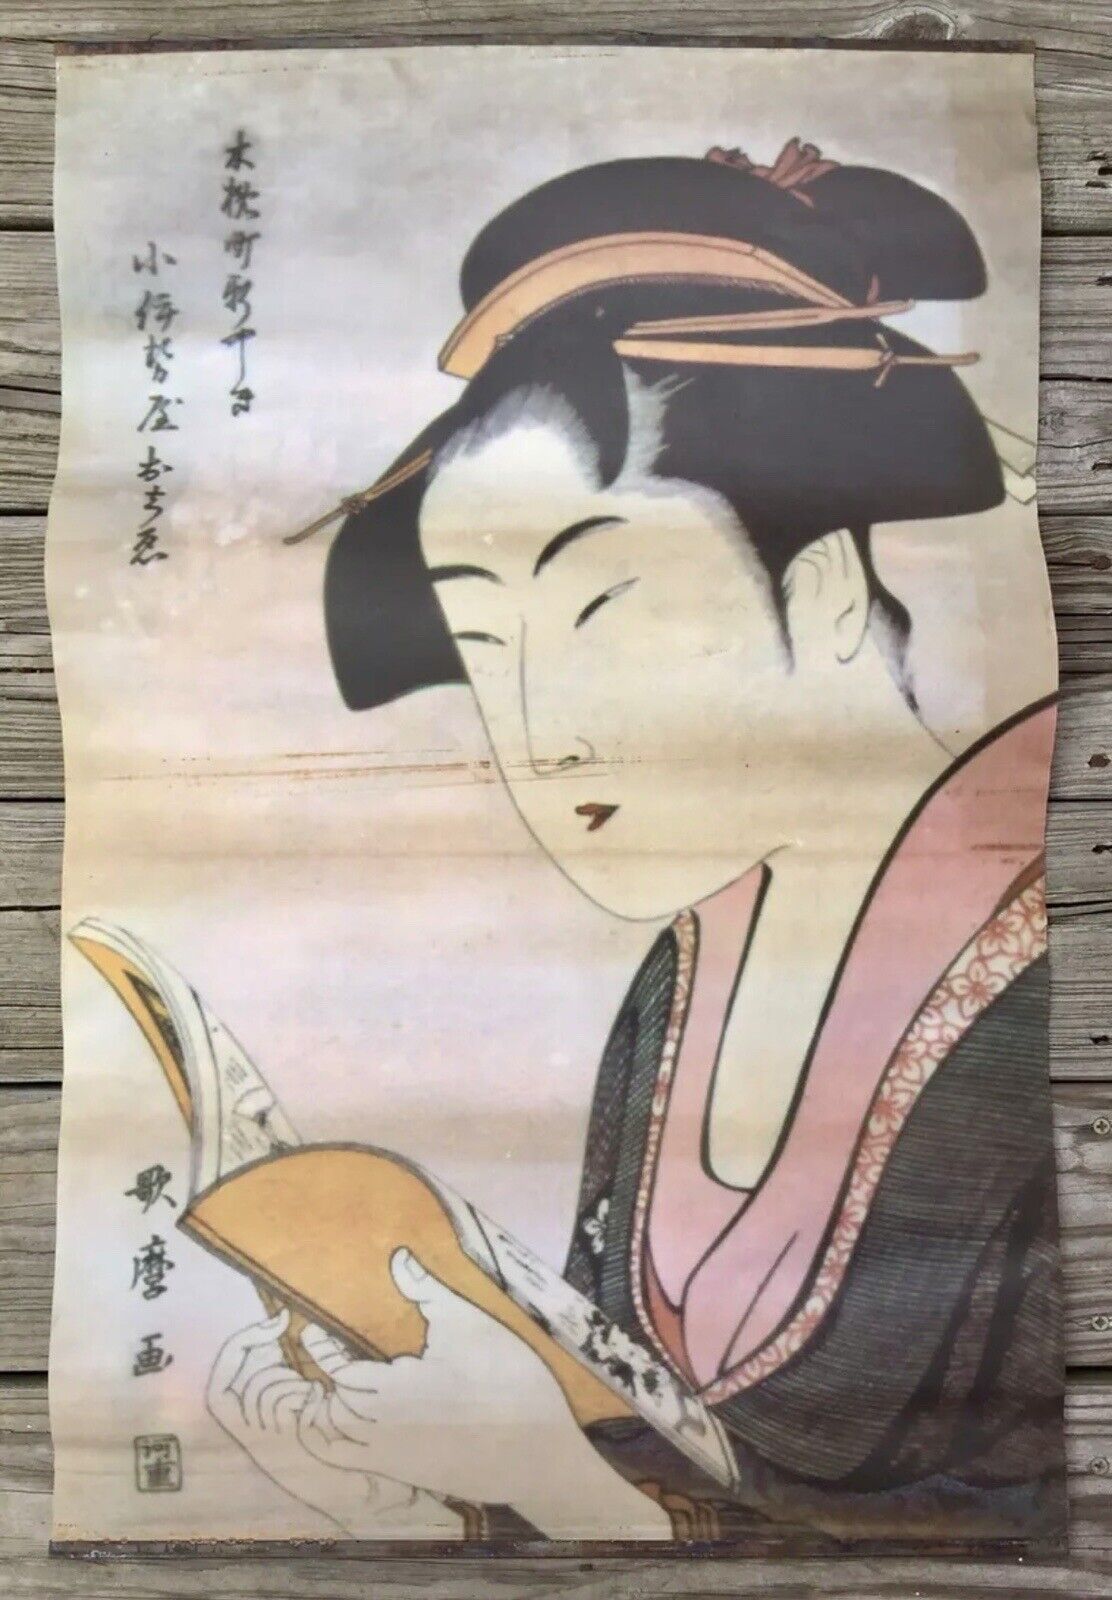 Japanese Reading Vintage Advertising Poster, 31” x 19.5”